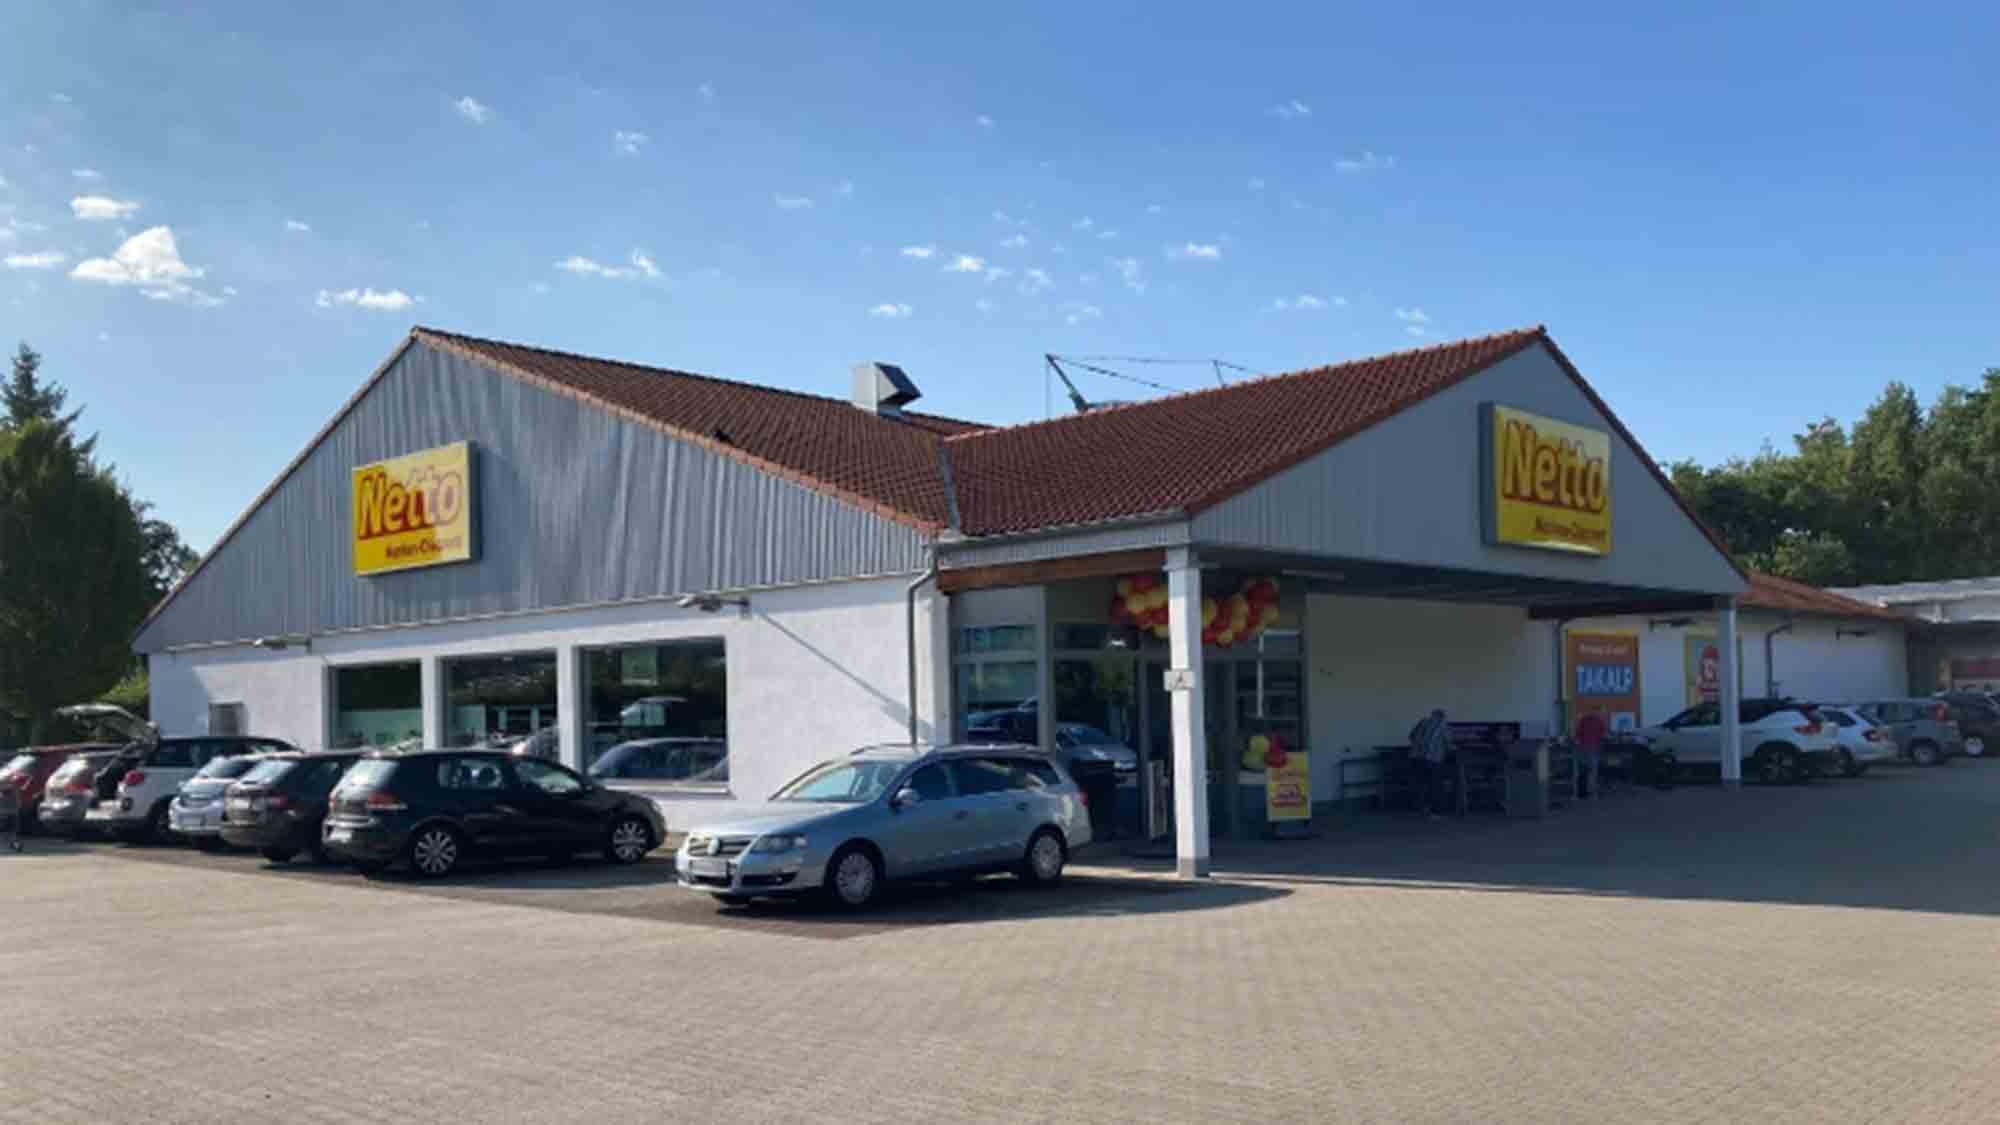 Netto Marken Discount eröffnet neue Filiale in Nieder Ramstadt